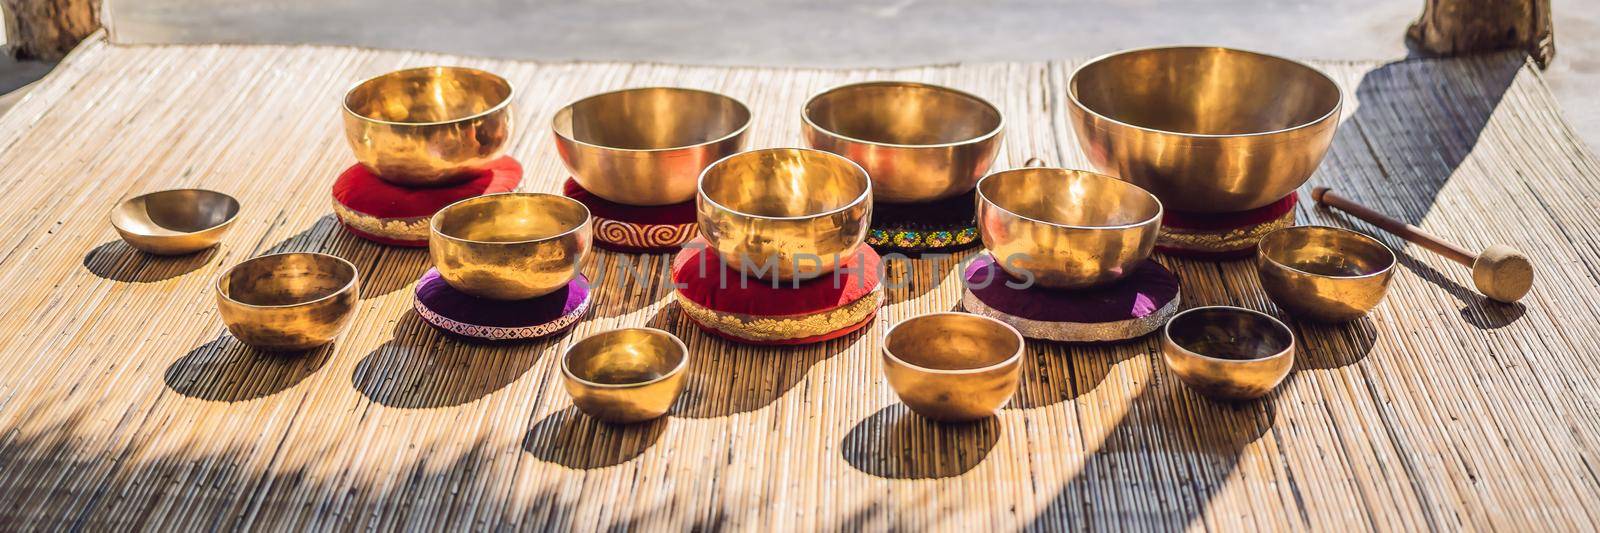 Tibetan singing bowls on a straw mat against a waterfall. BANNER, LONG FORMAT